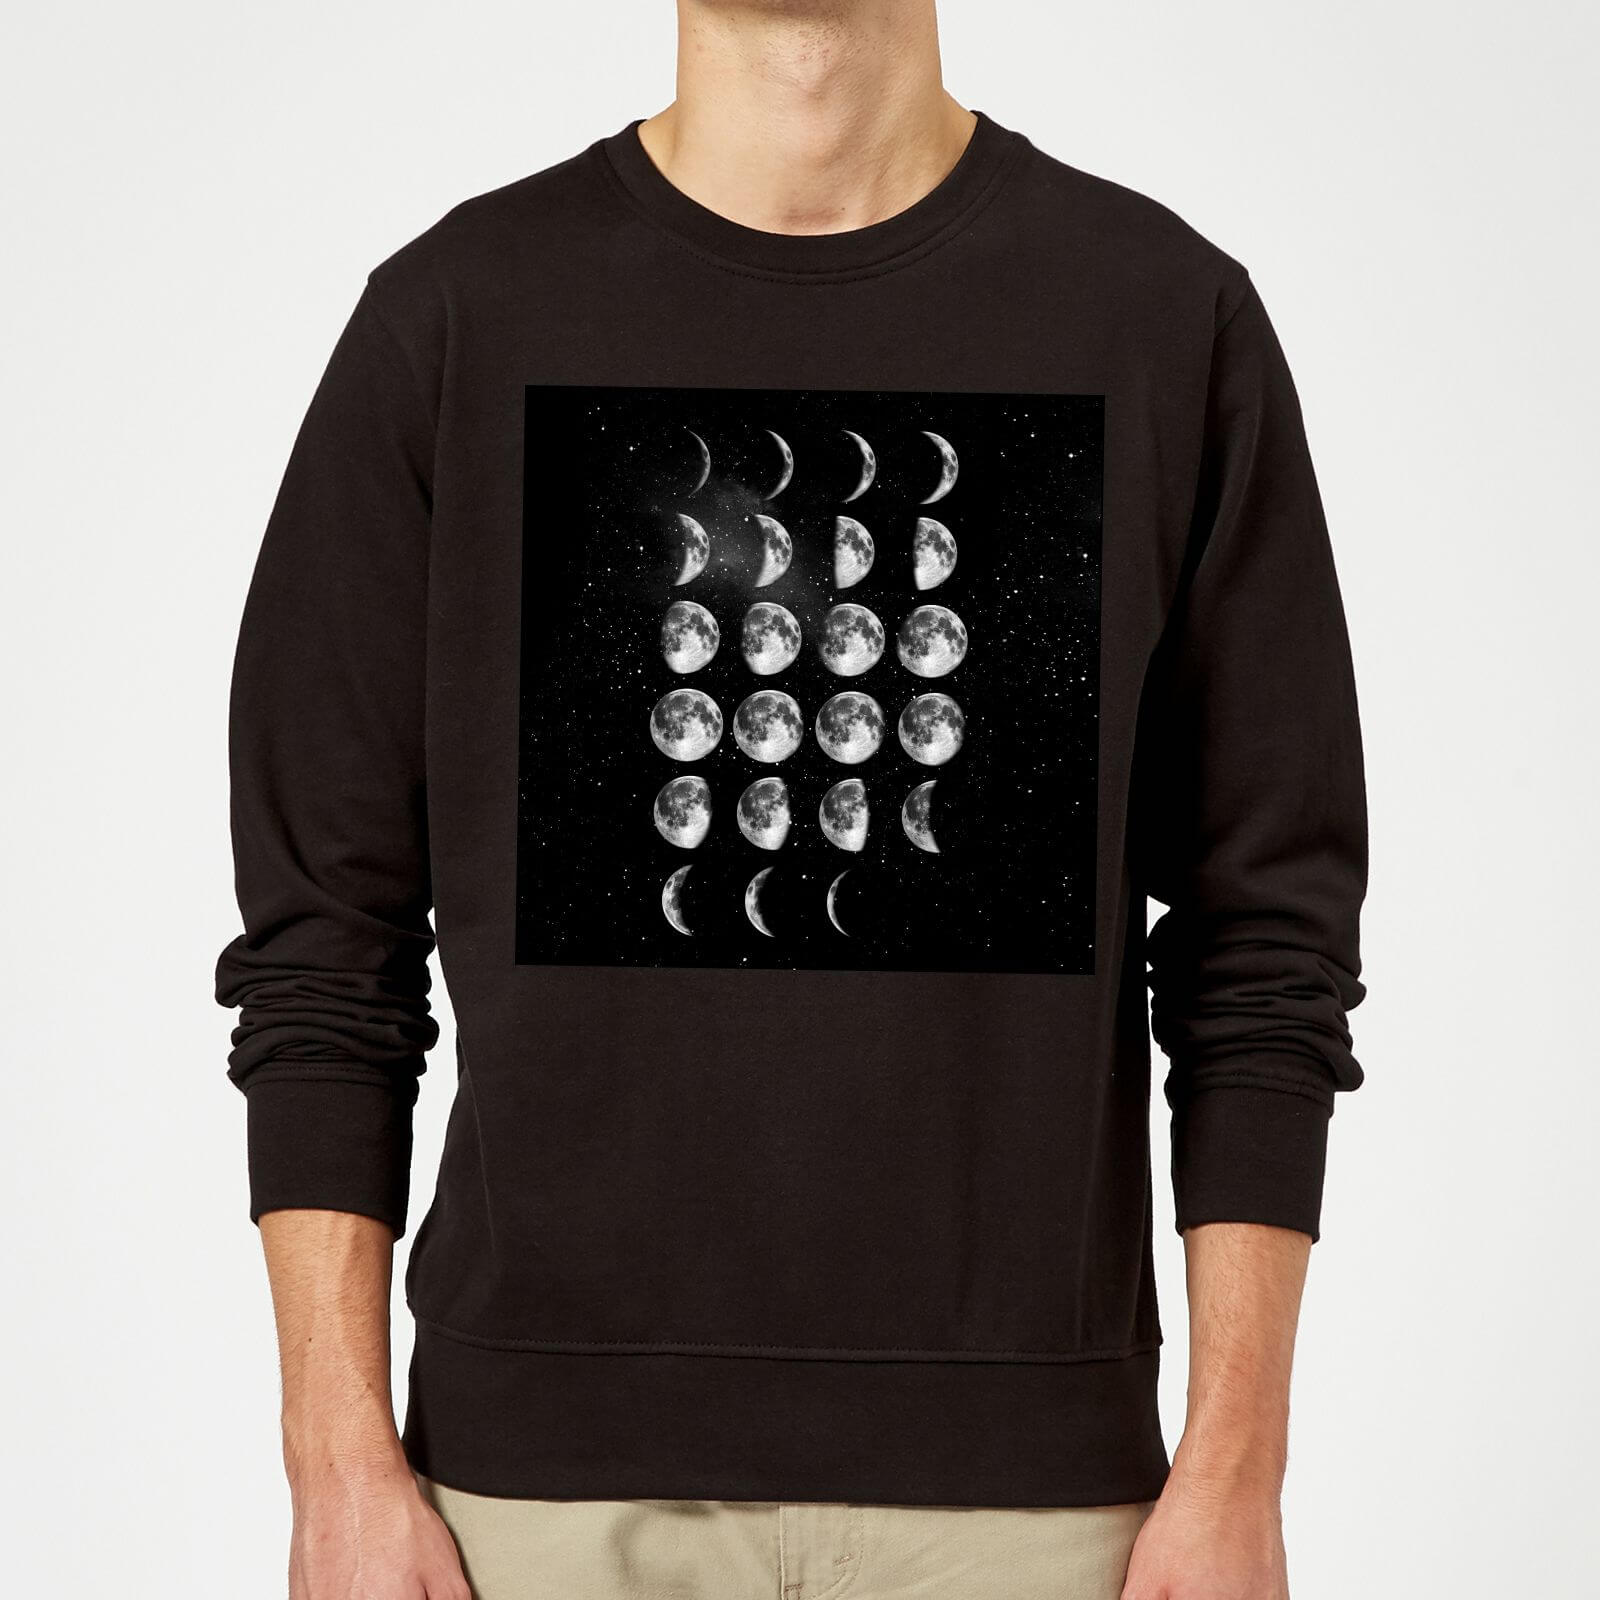 The Motivated Type Moon Cycle Sweatshirt - Black - S - Black